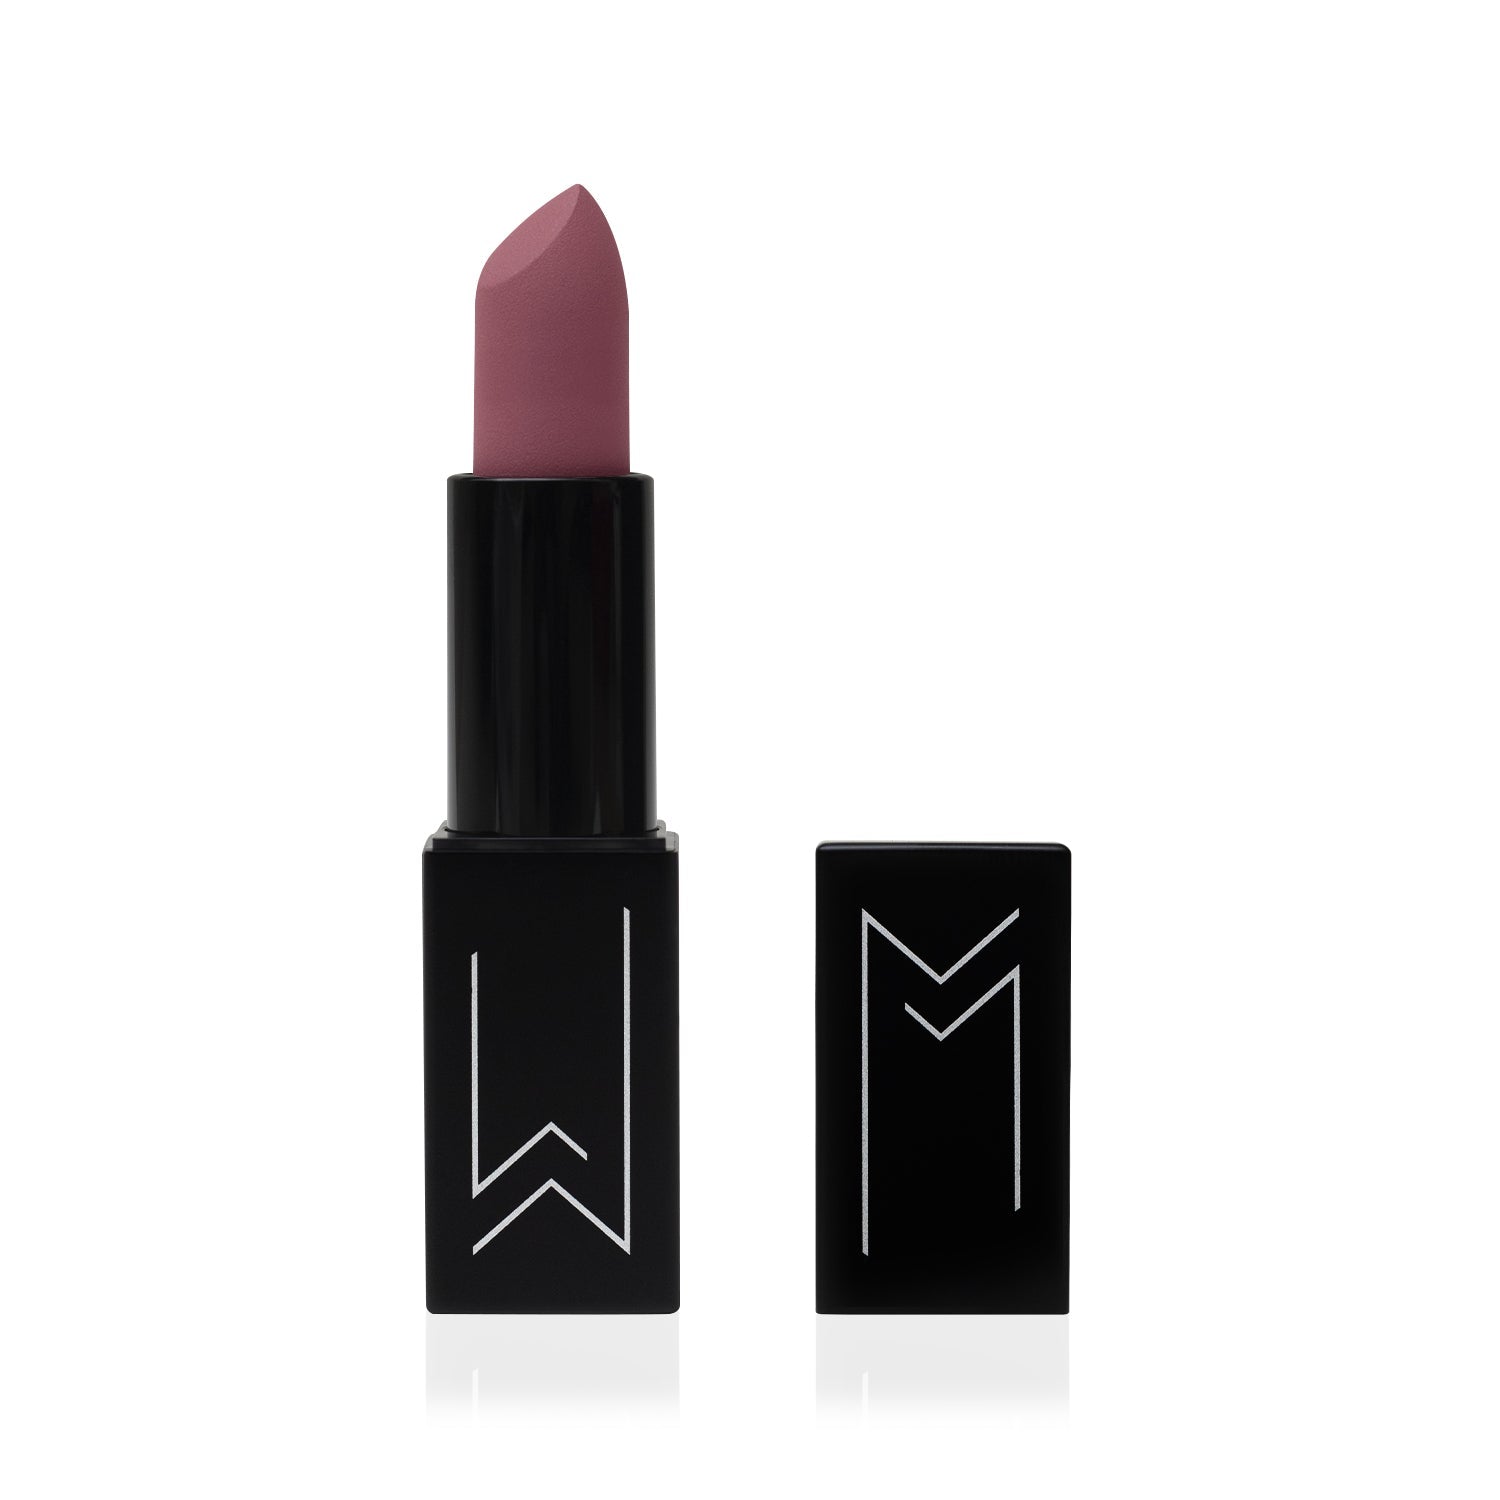 PAC Cosmetics Matte Mischief (3.5 gm) #Color_Wineberry